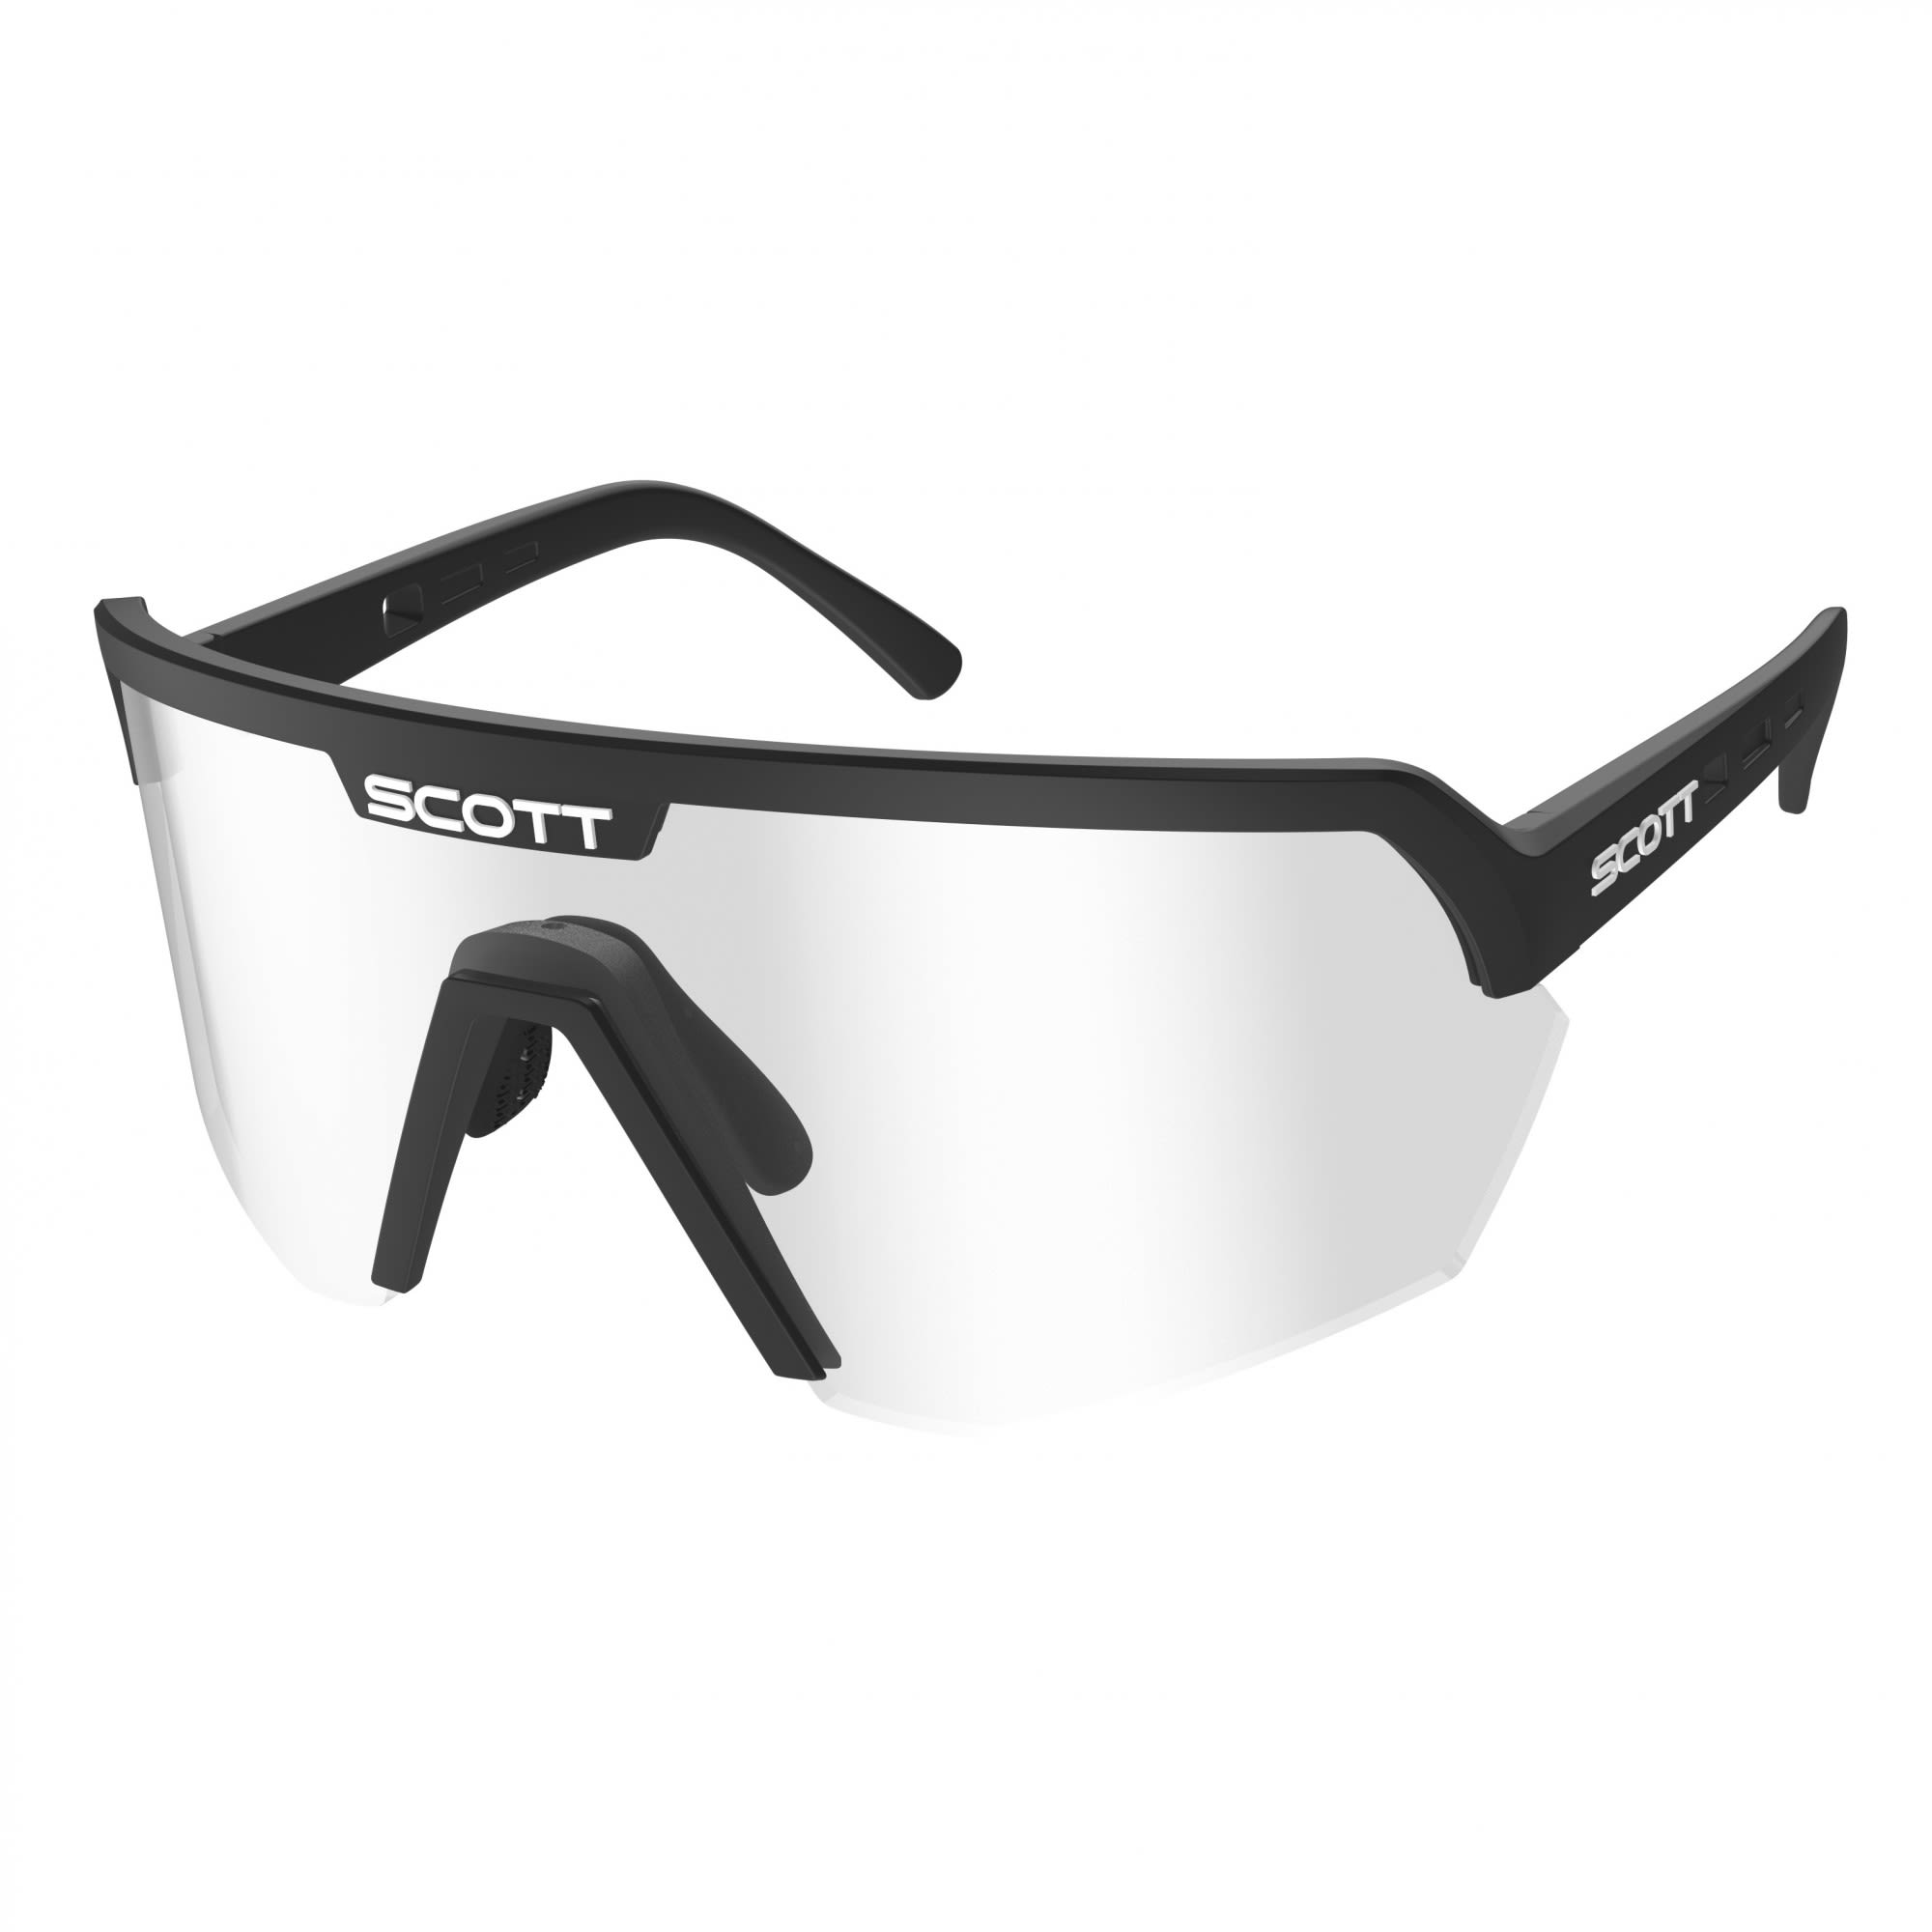 Scott Sport Shield Sunglasses Schwarz, Accessoires, Größe One Size - Farbe Black - Clear